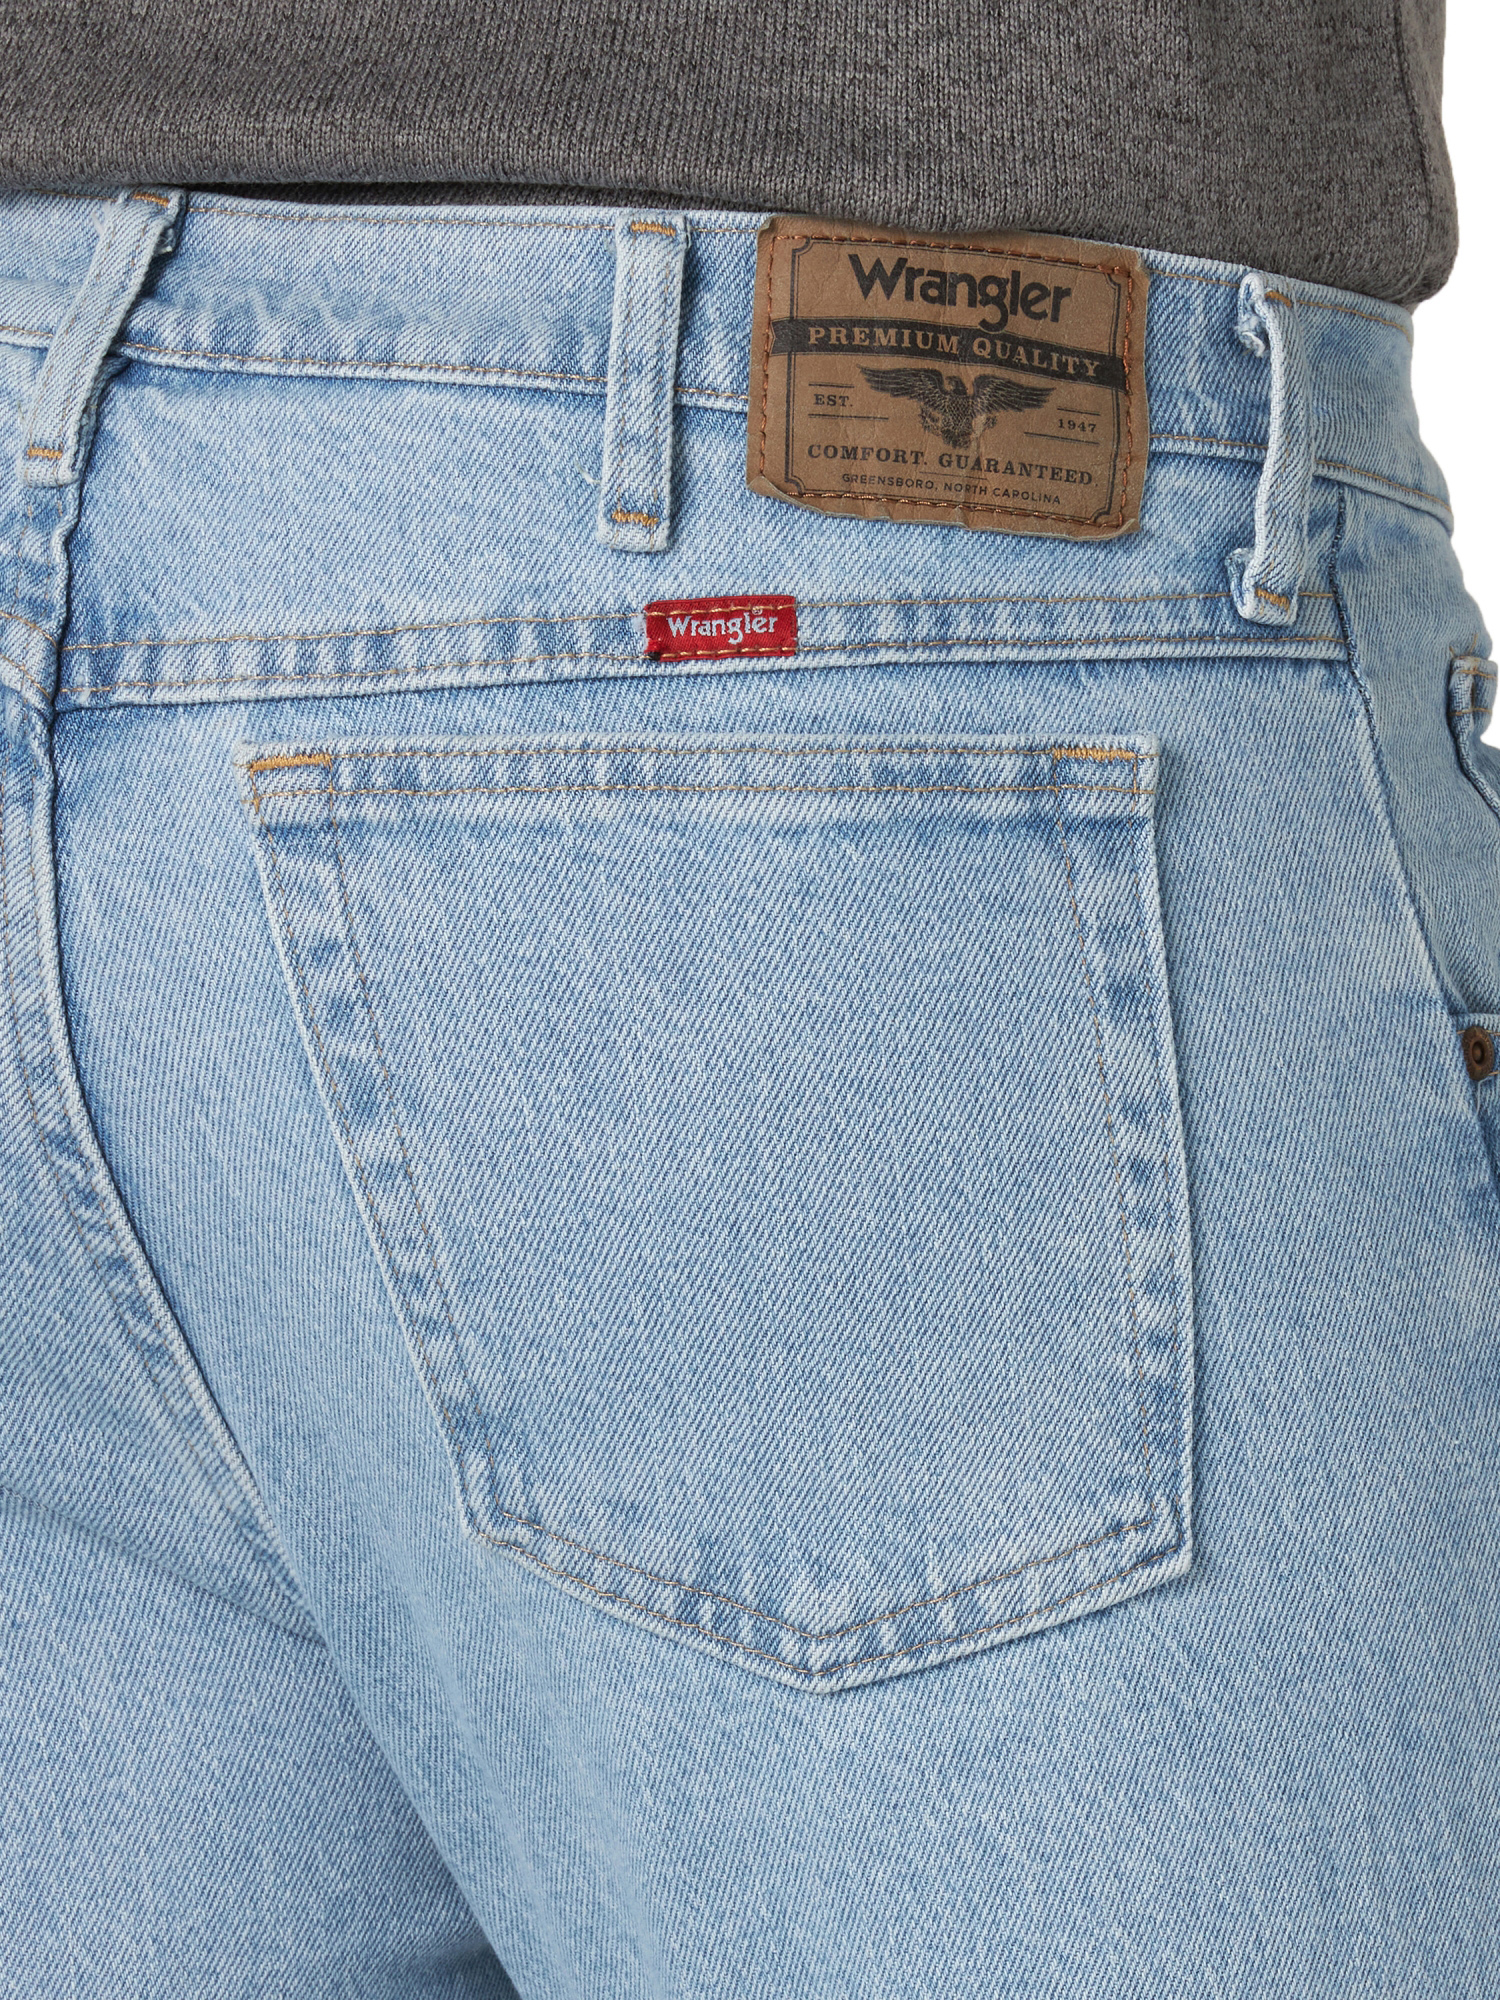 Wrangler Men's and Big Men's Regular Fit Jeans with Flex - image 5 of 10